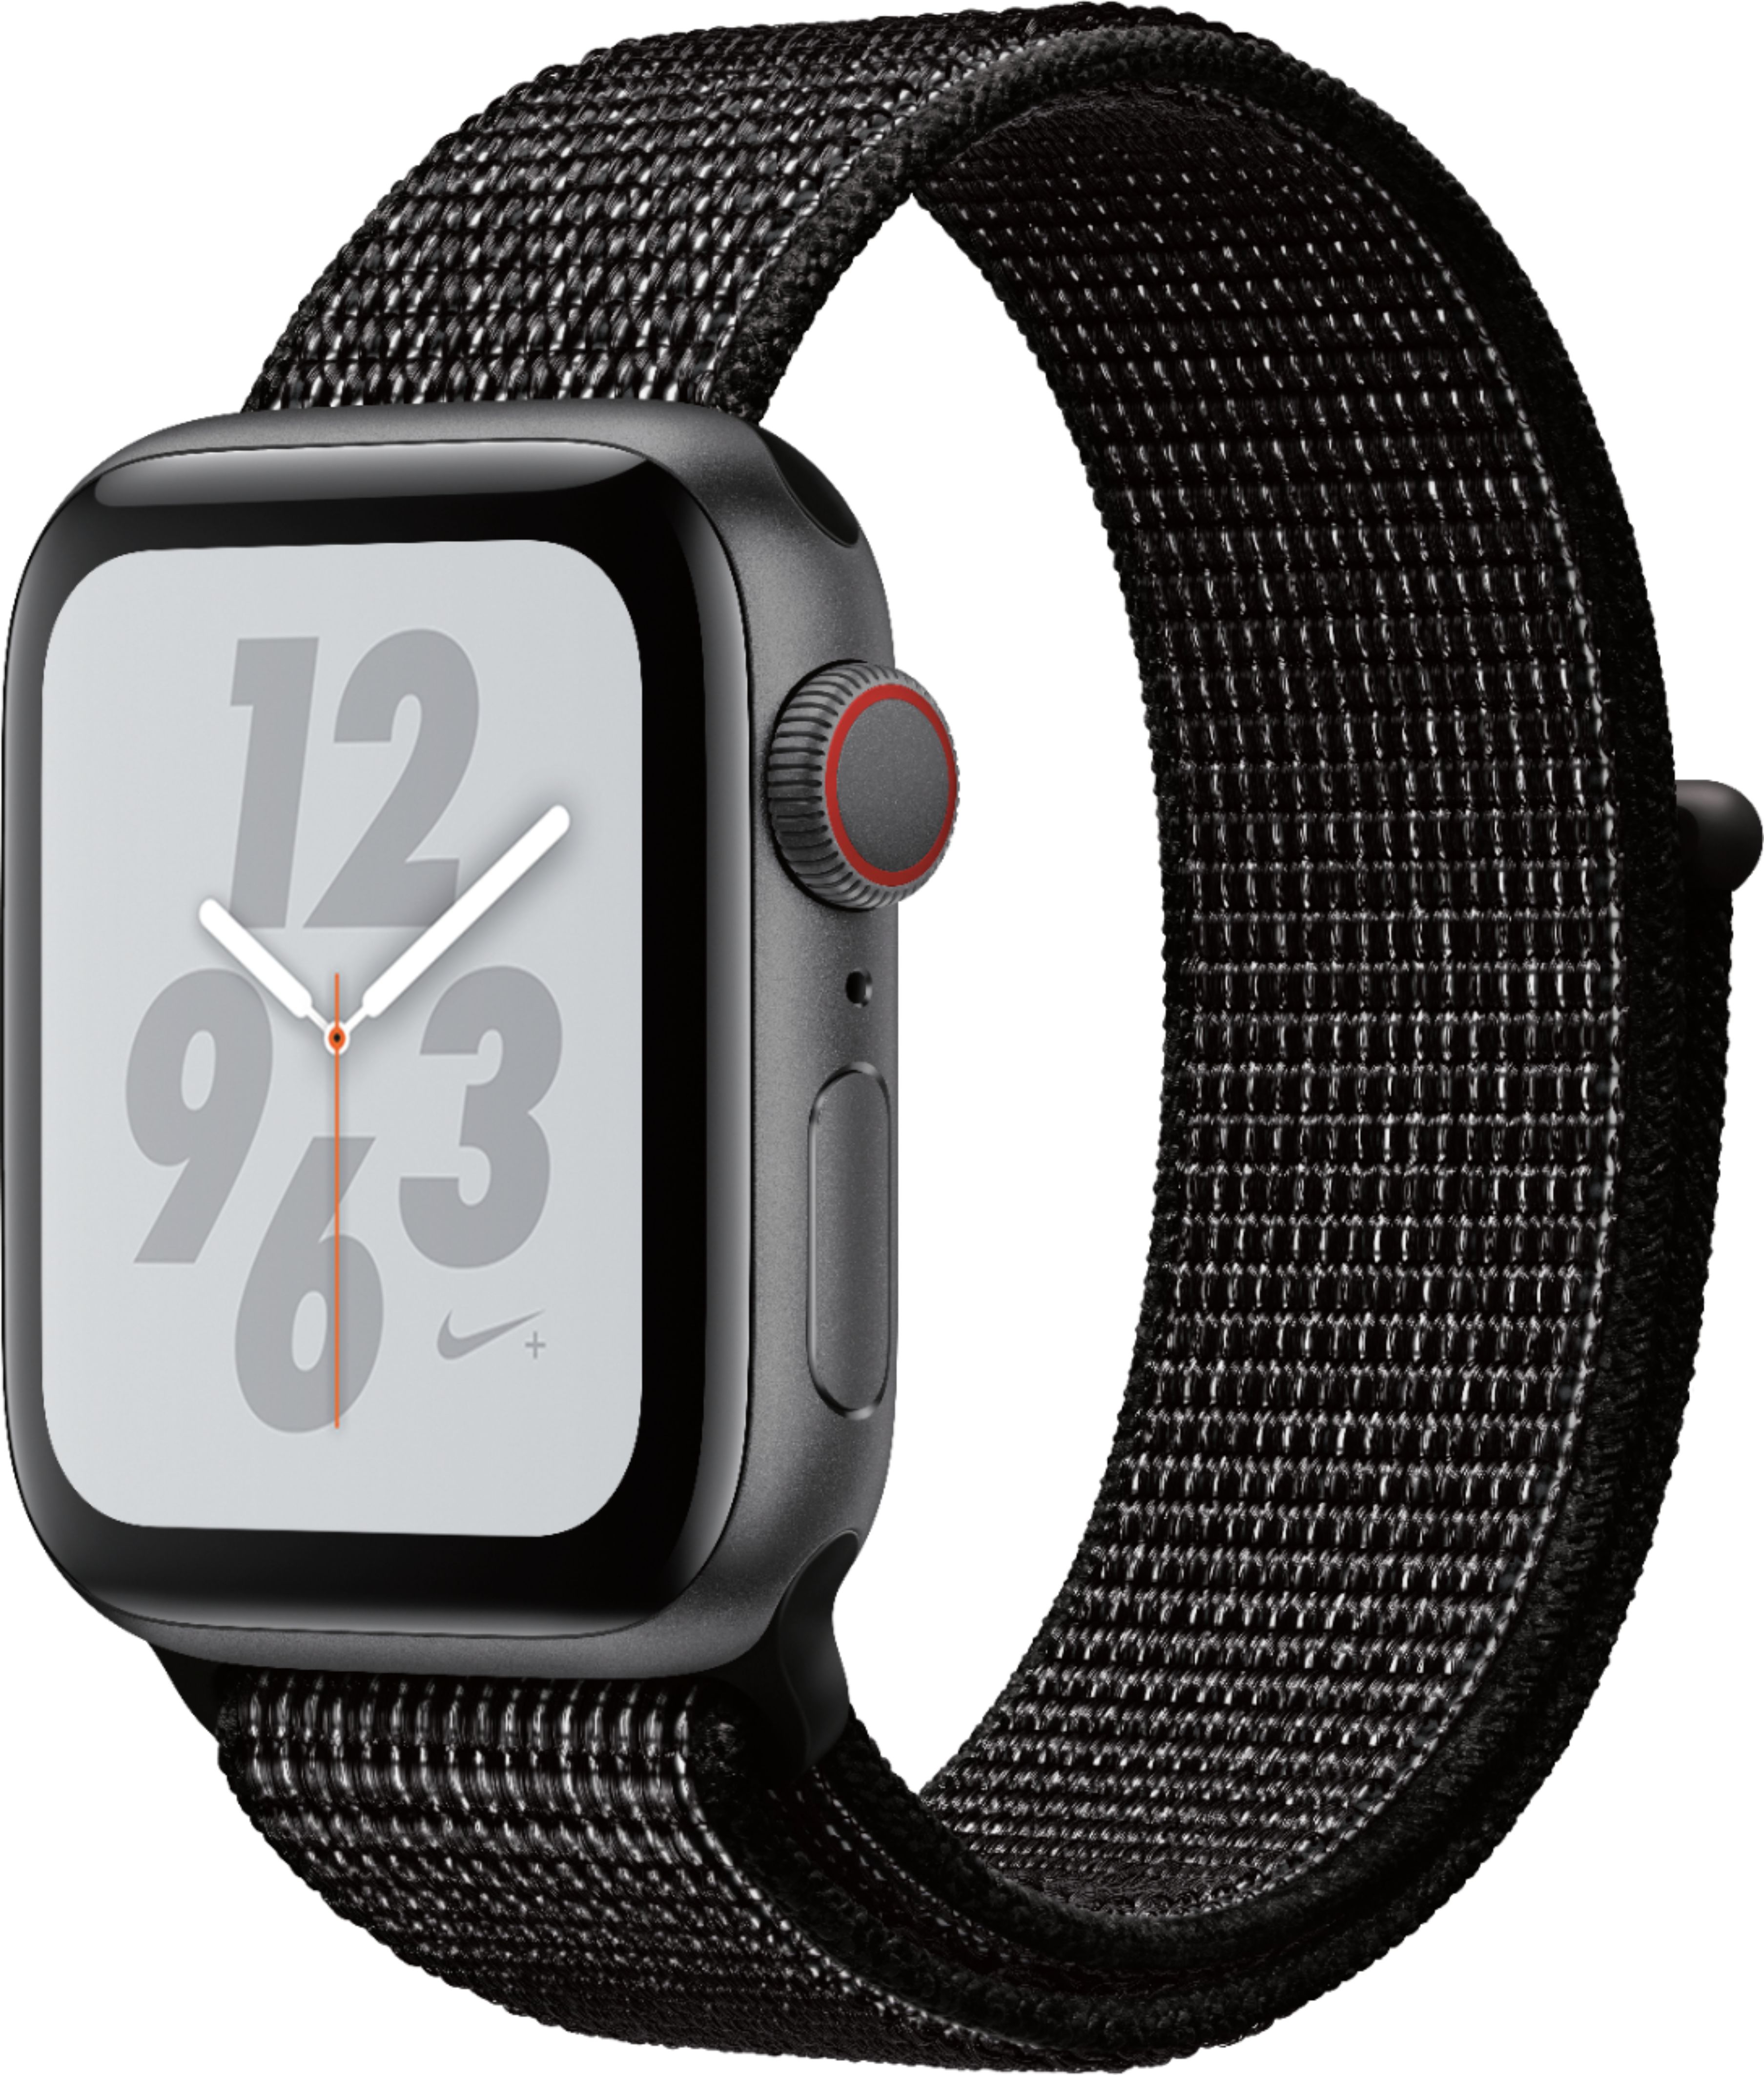 Geek Squad Certified Refurbished Apple Watch Nike+ Series 4 (GPS + Cellular) 40mm Aluminum Case with Nike Sport Loop - Space Gray Aluminum